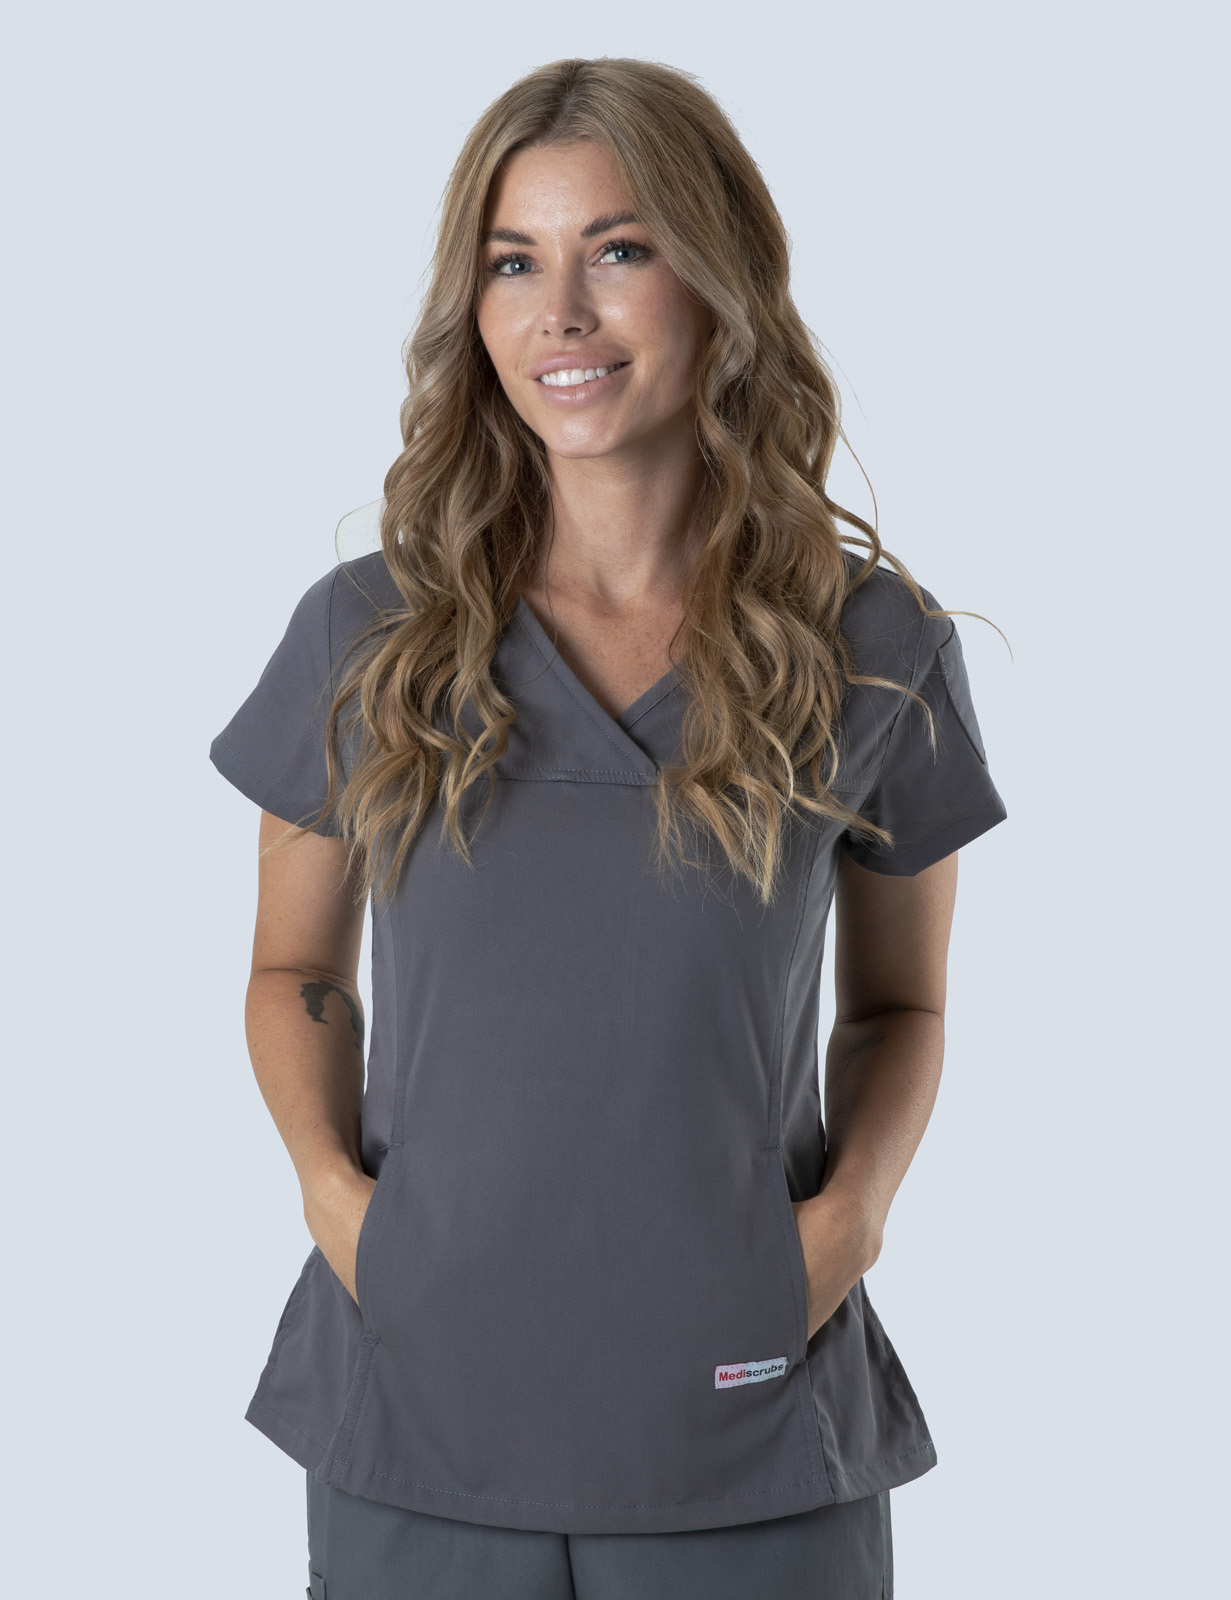 Queensland Children's Hospital Emergency Department Clinical Nurse  Uniform Top Bundle  (Women's Fit Top in Steel Grey  incl Logos)